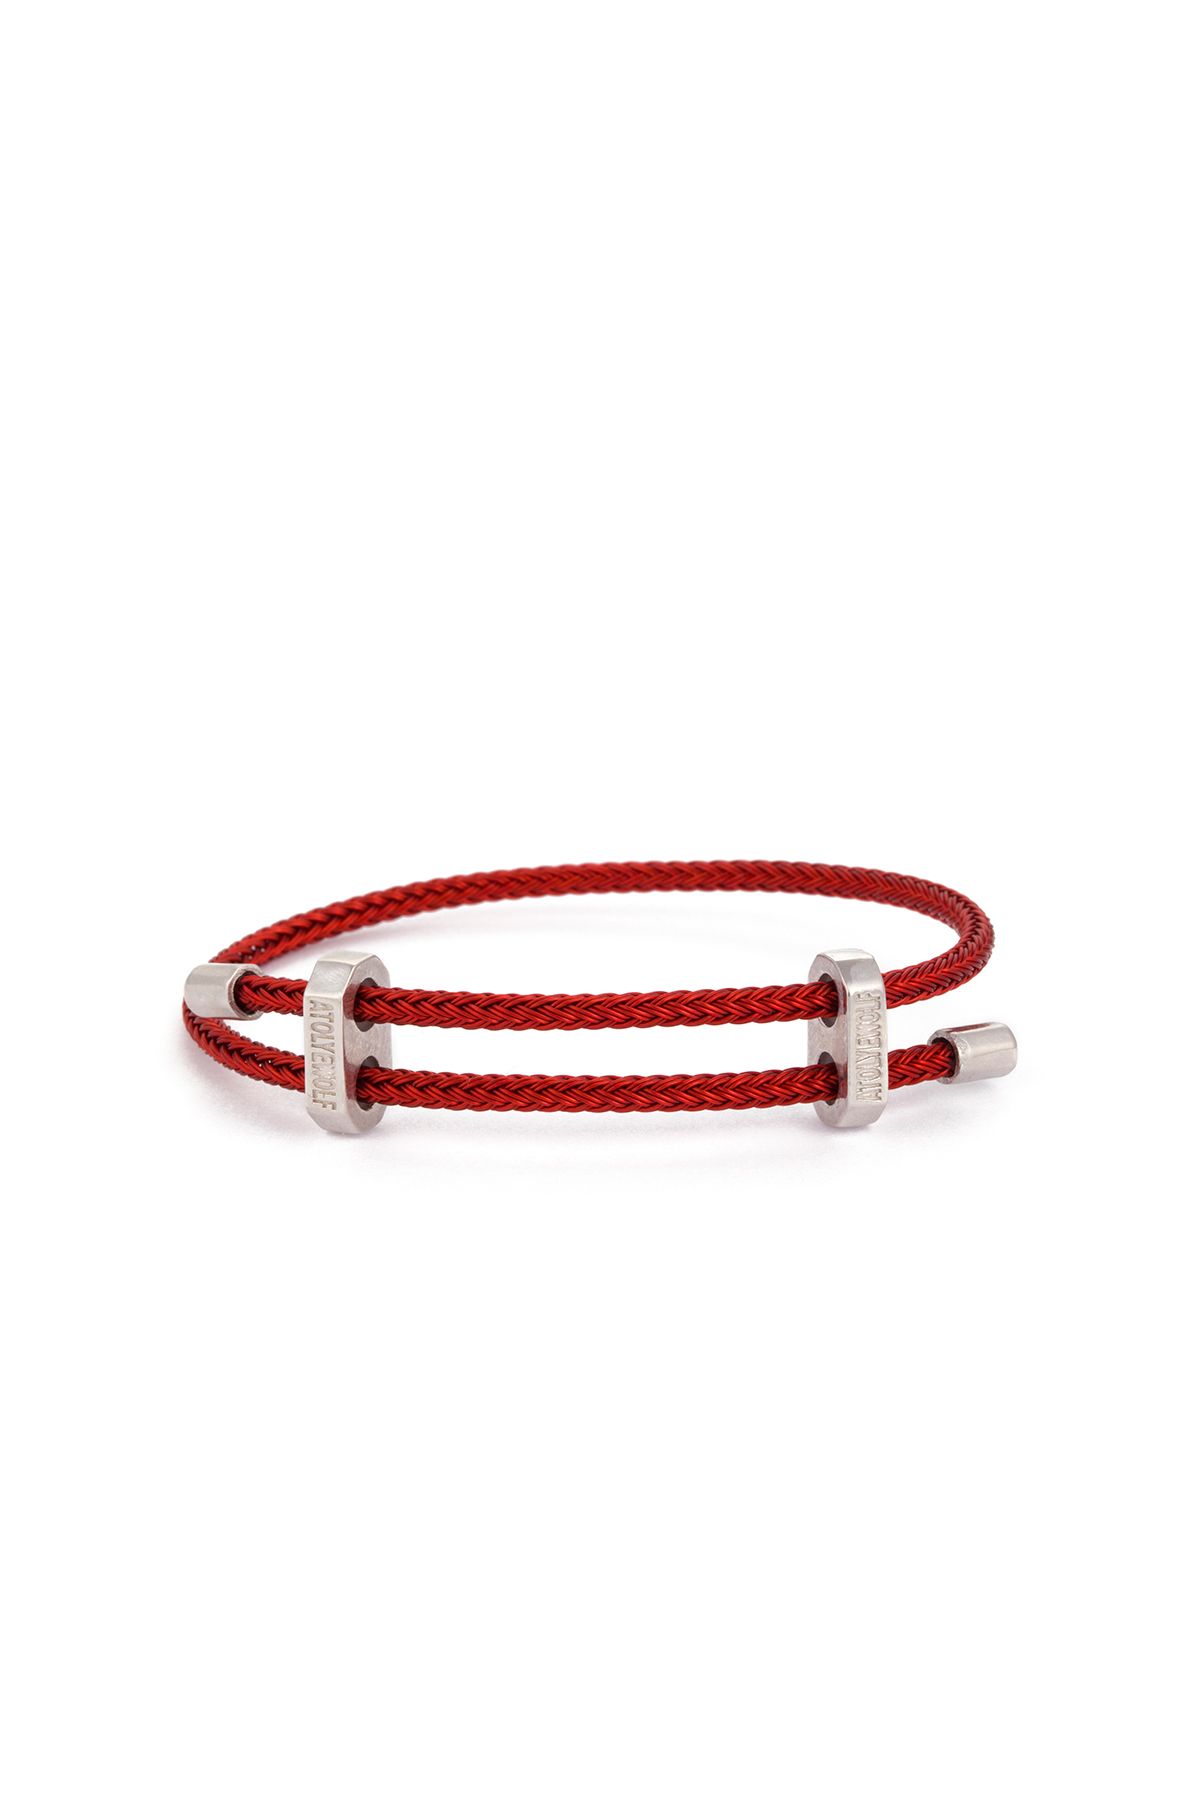 Atolyewolf Red Luxury Bracelet in Silver